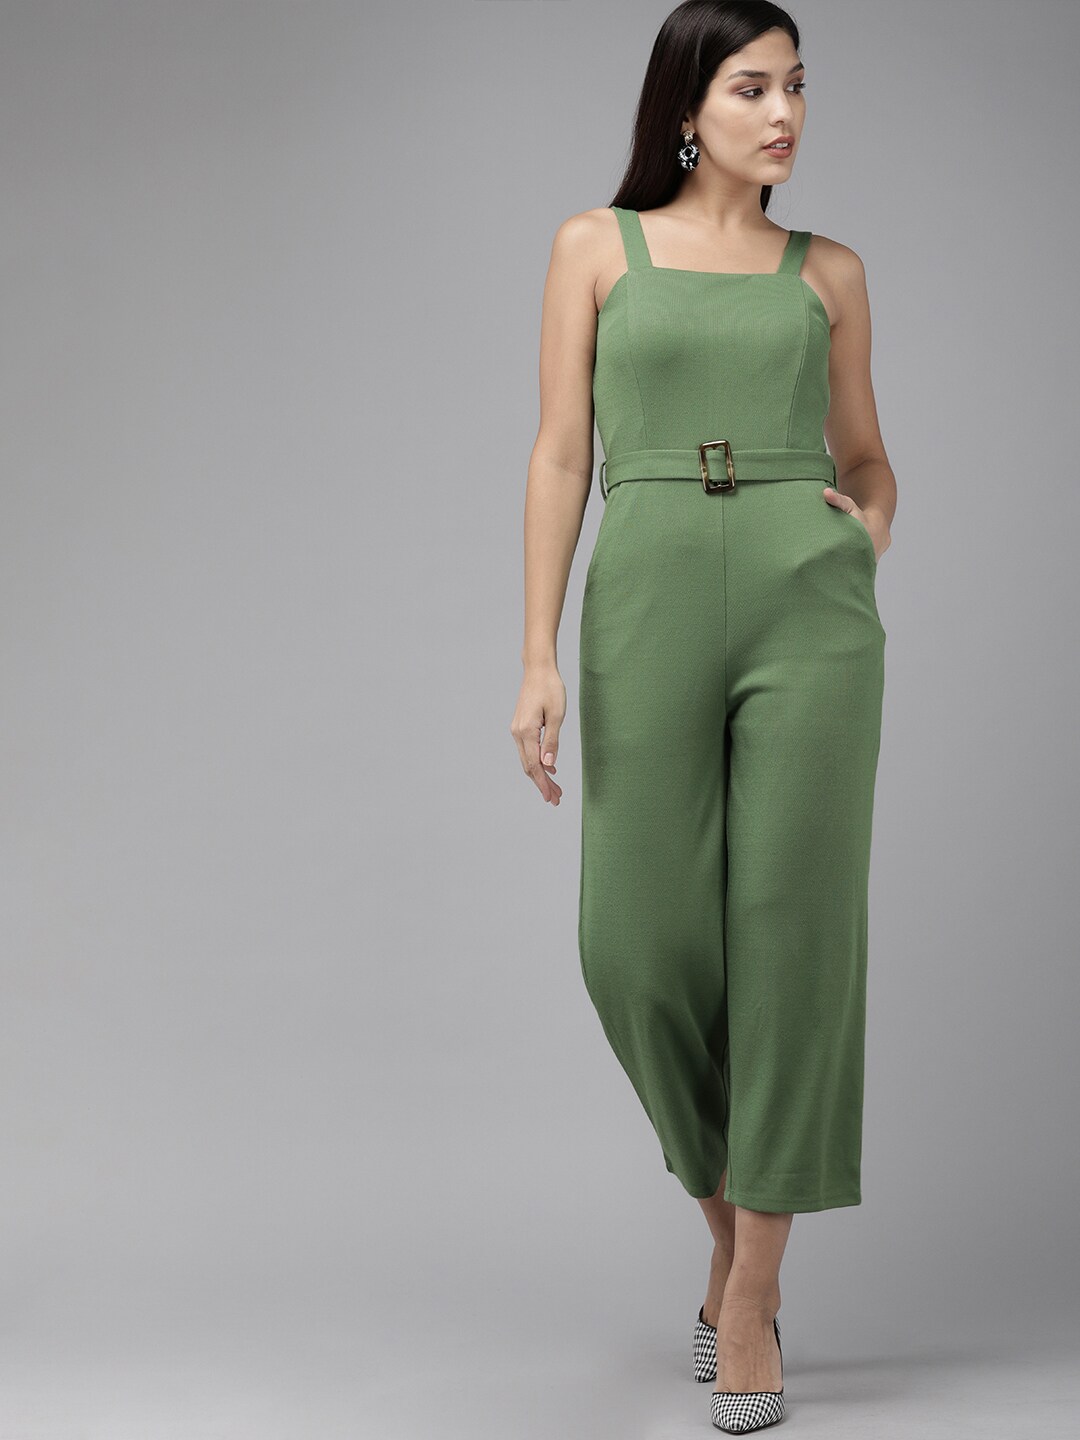 Vero Moda Women Green Solid Basic Jumpsuit Price in India